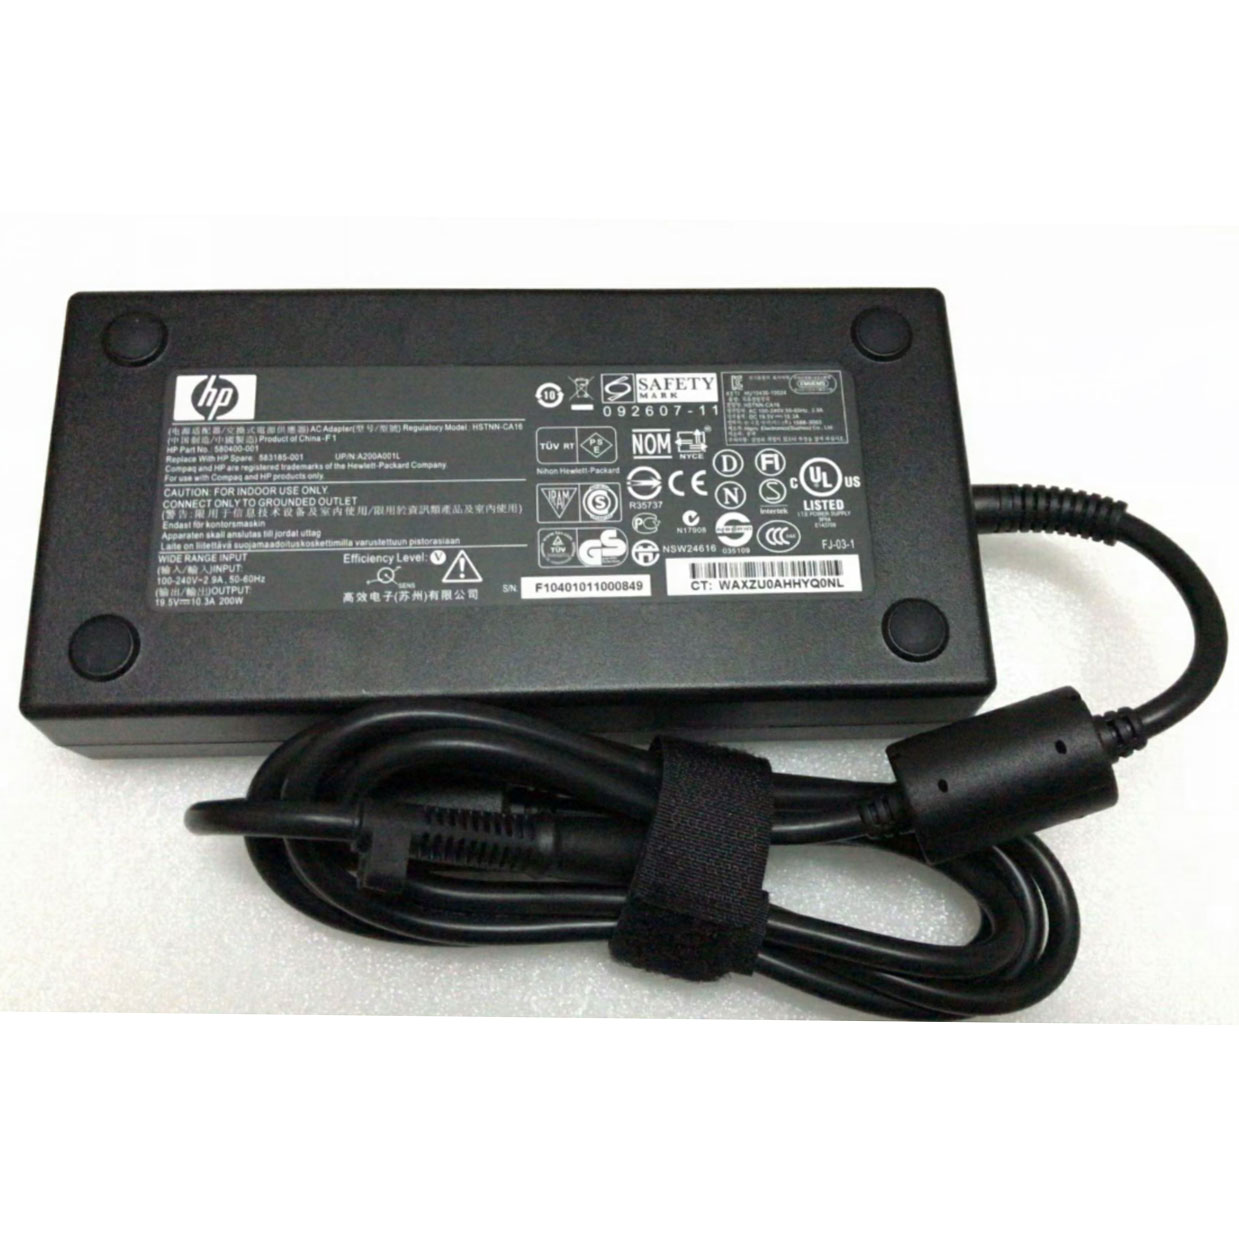 HP TouchSmart 300-1000 Desktop PC series AC Adapter Charger